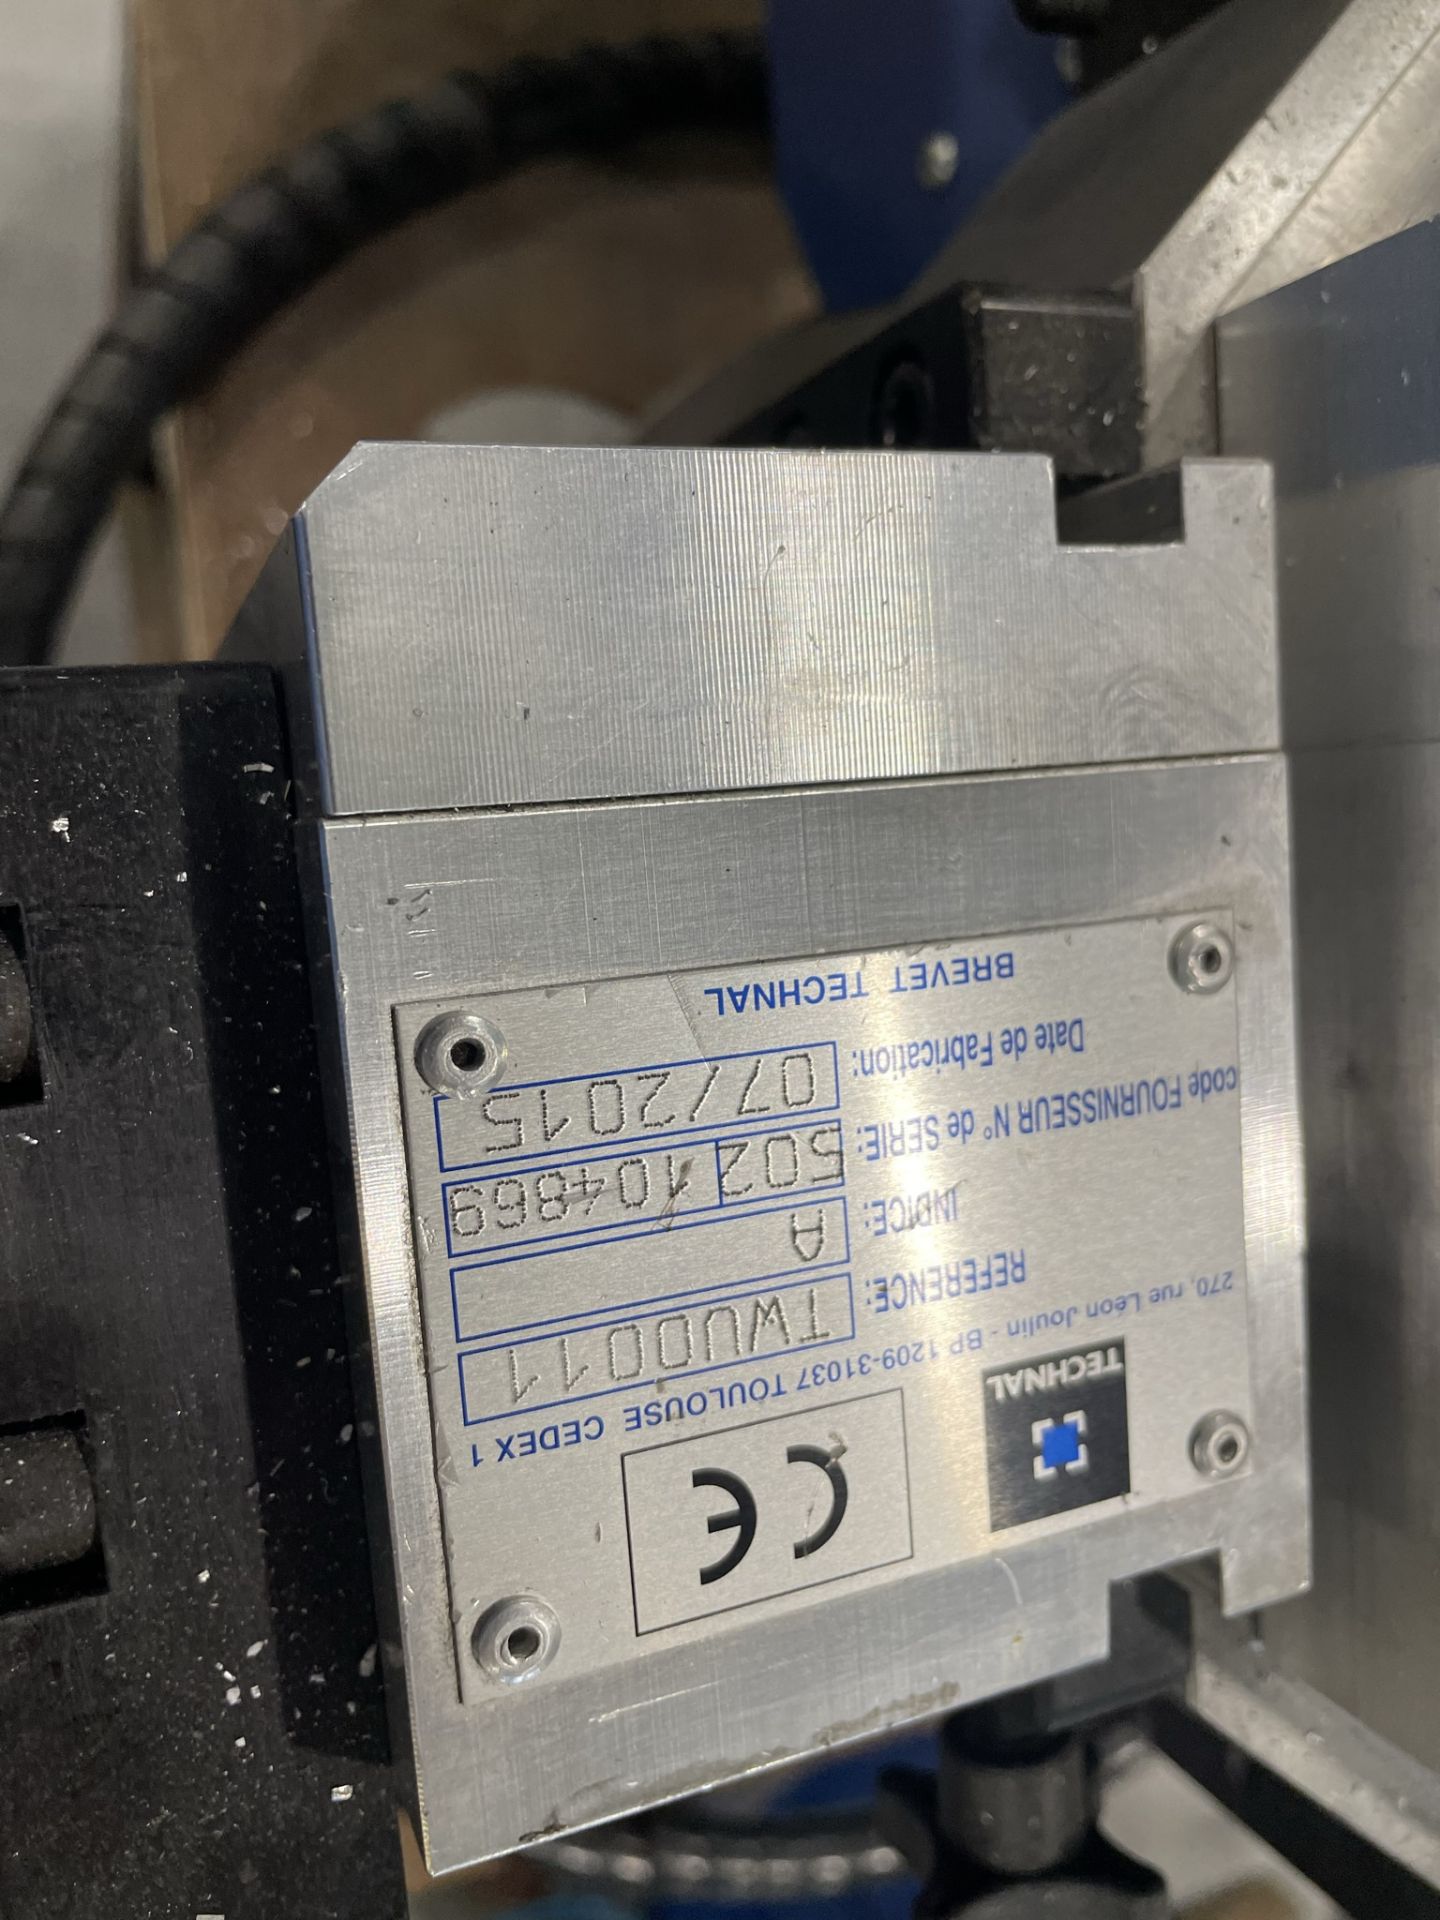 Hydro, TWU0005/104869 pneumatic press, Serial No. 849 (DOM: 2014), Technal WU0009, EK7017, - Image 4 of 5